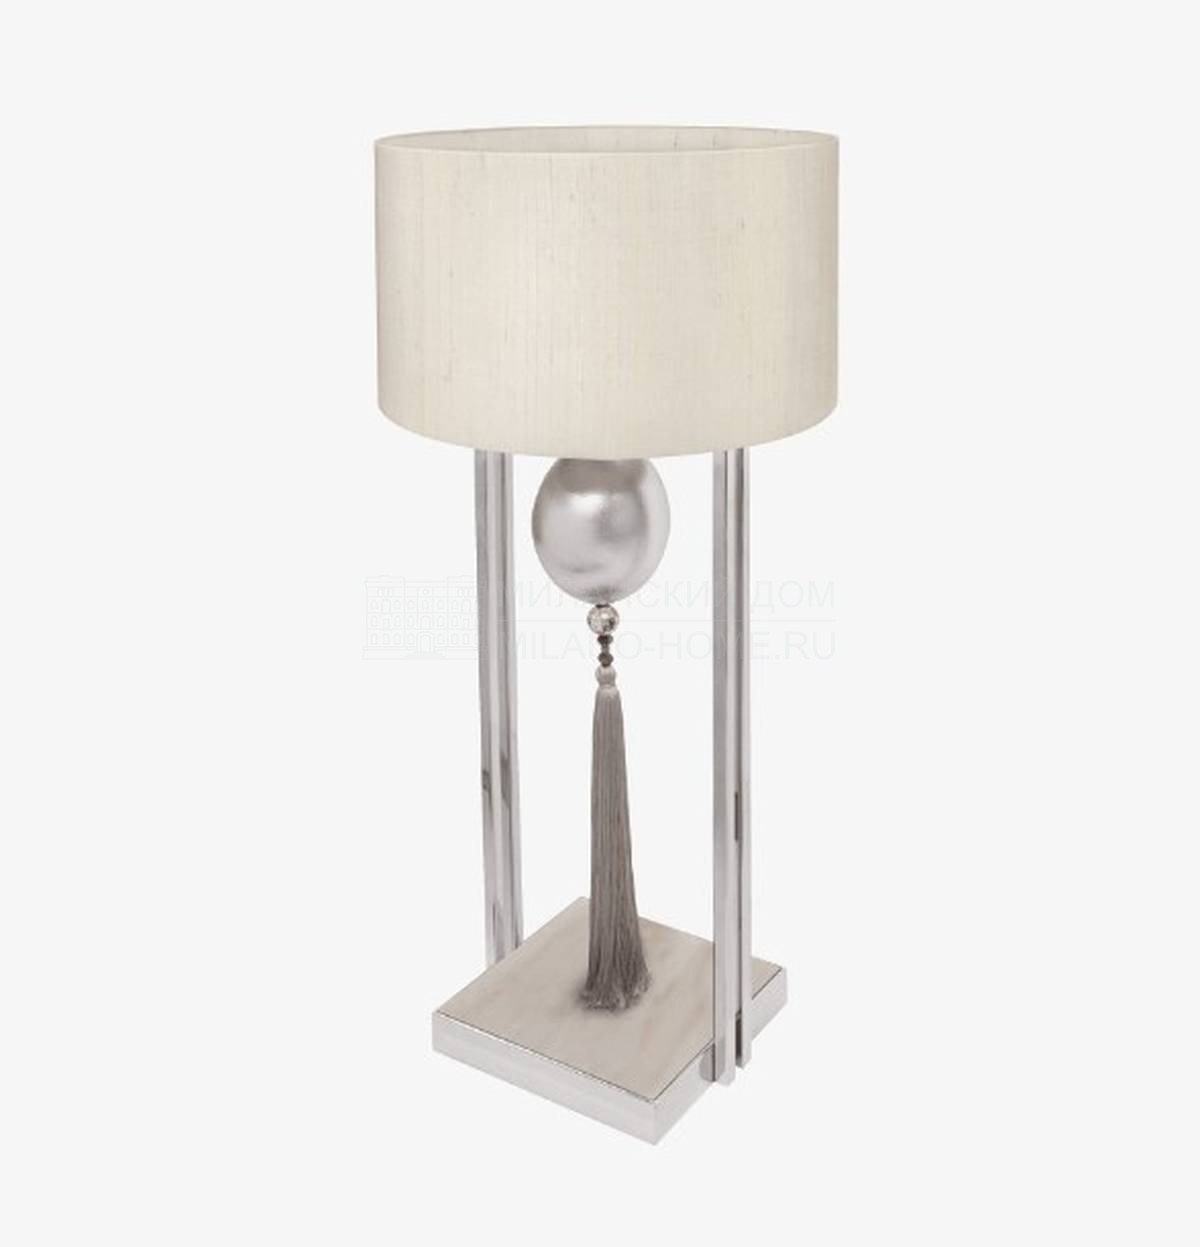 Настольная лампа Soul table lamp из Португалии фабрики FRATO